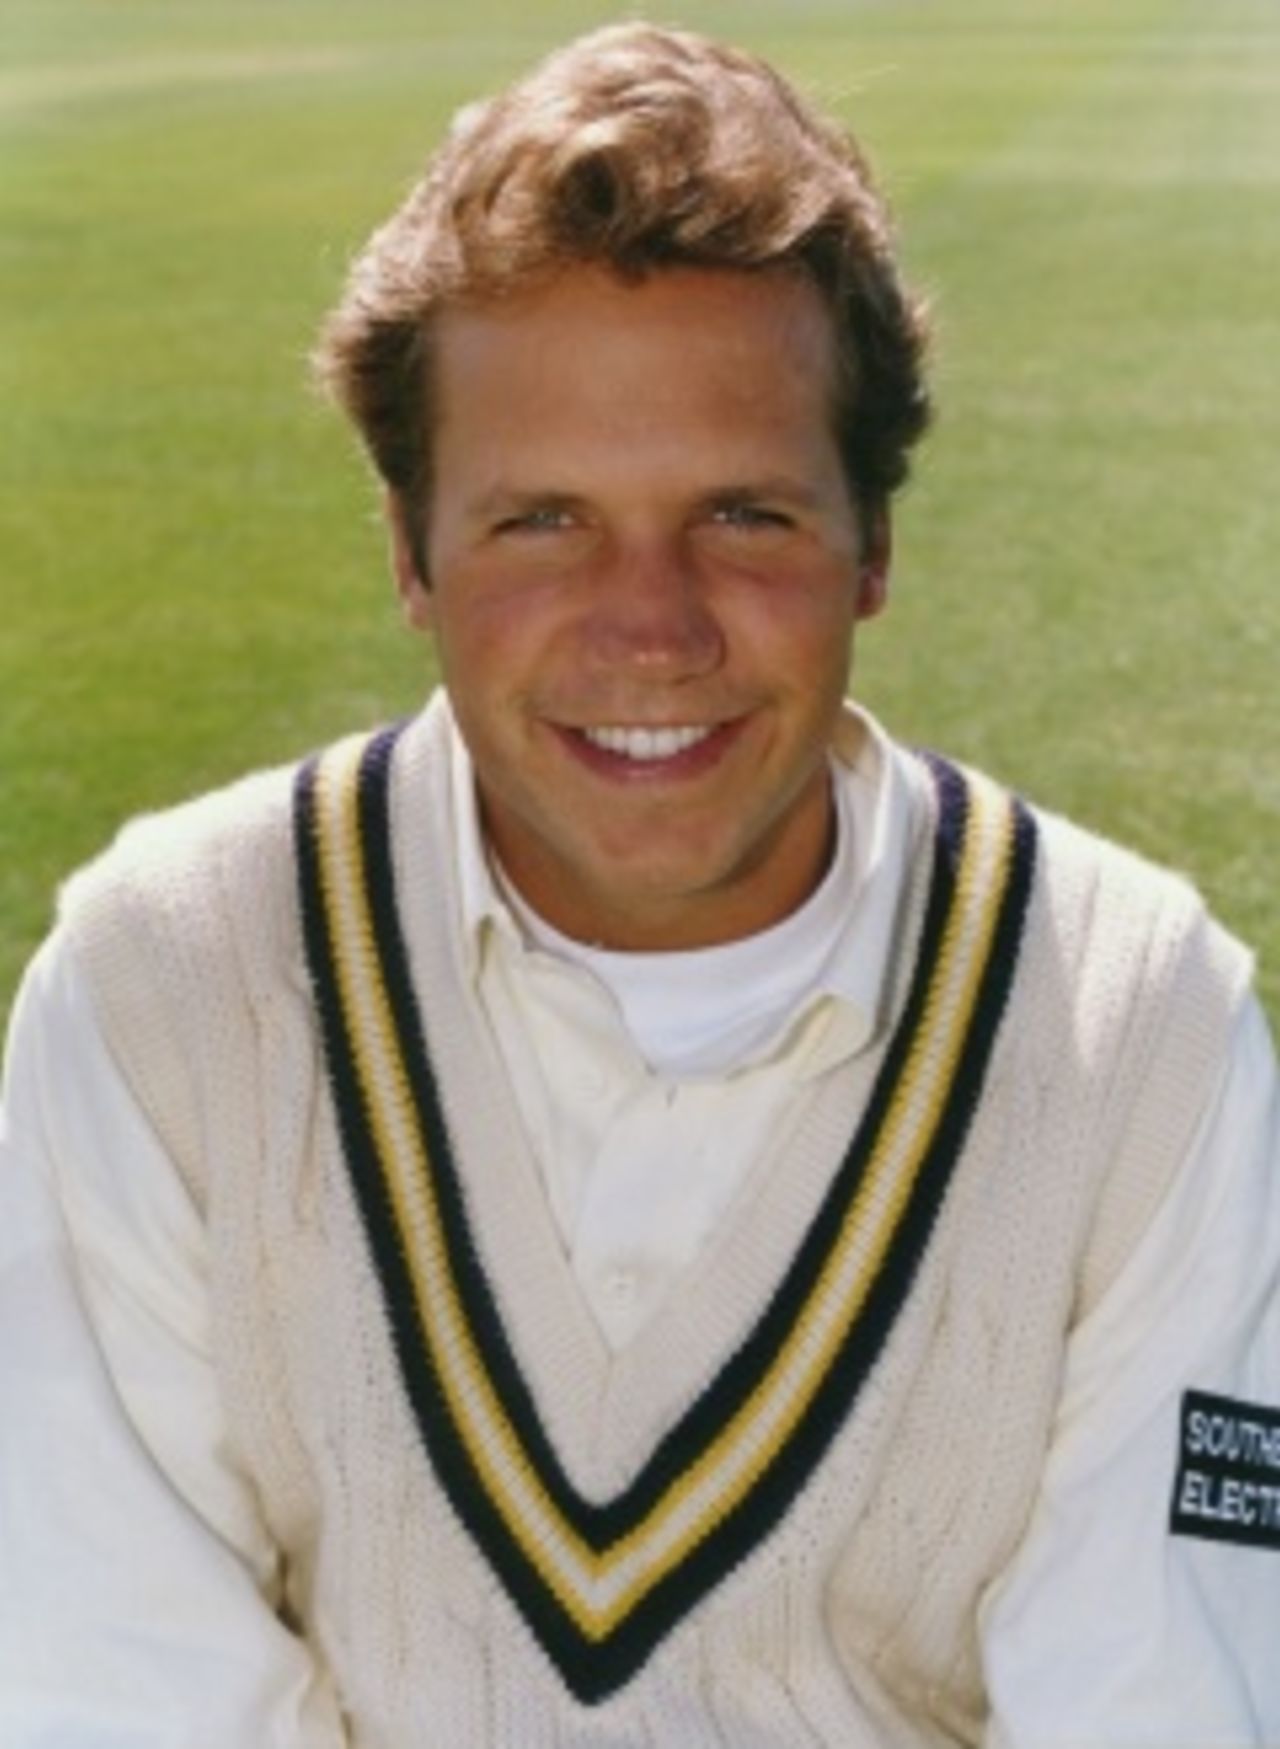 Sean Morris, Hampshire batsman 1992-1996